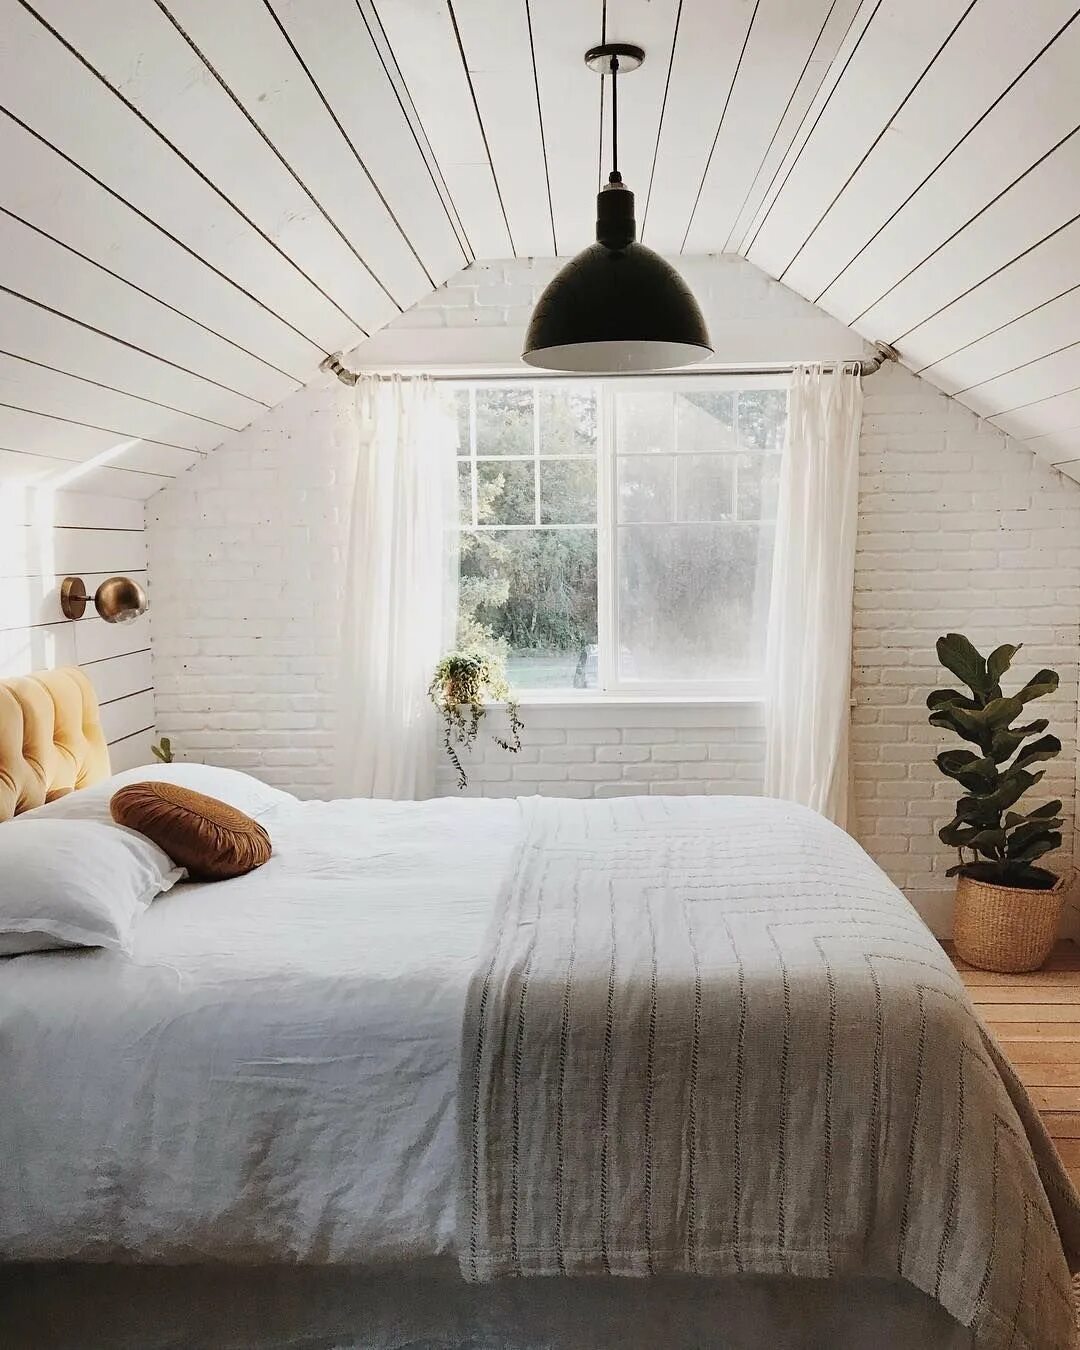 Свет в комнате на даче. Вагонка в интерьере. Спальня на даче в скандинавском стиле. Спальня на мансарде. Белая вагонка в интерьере.